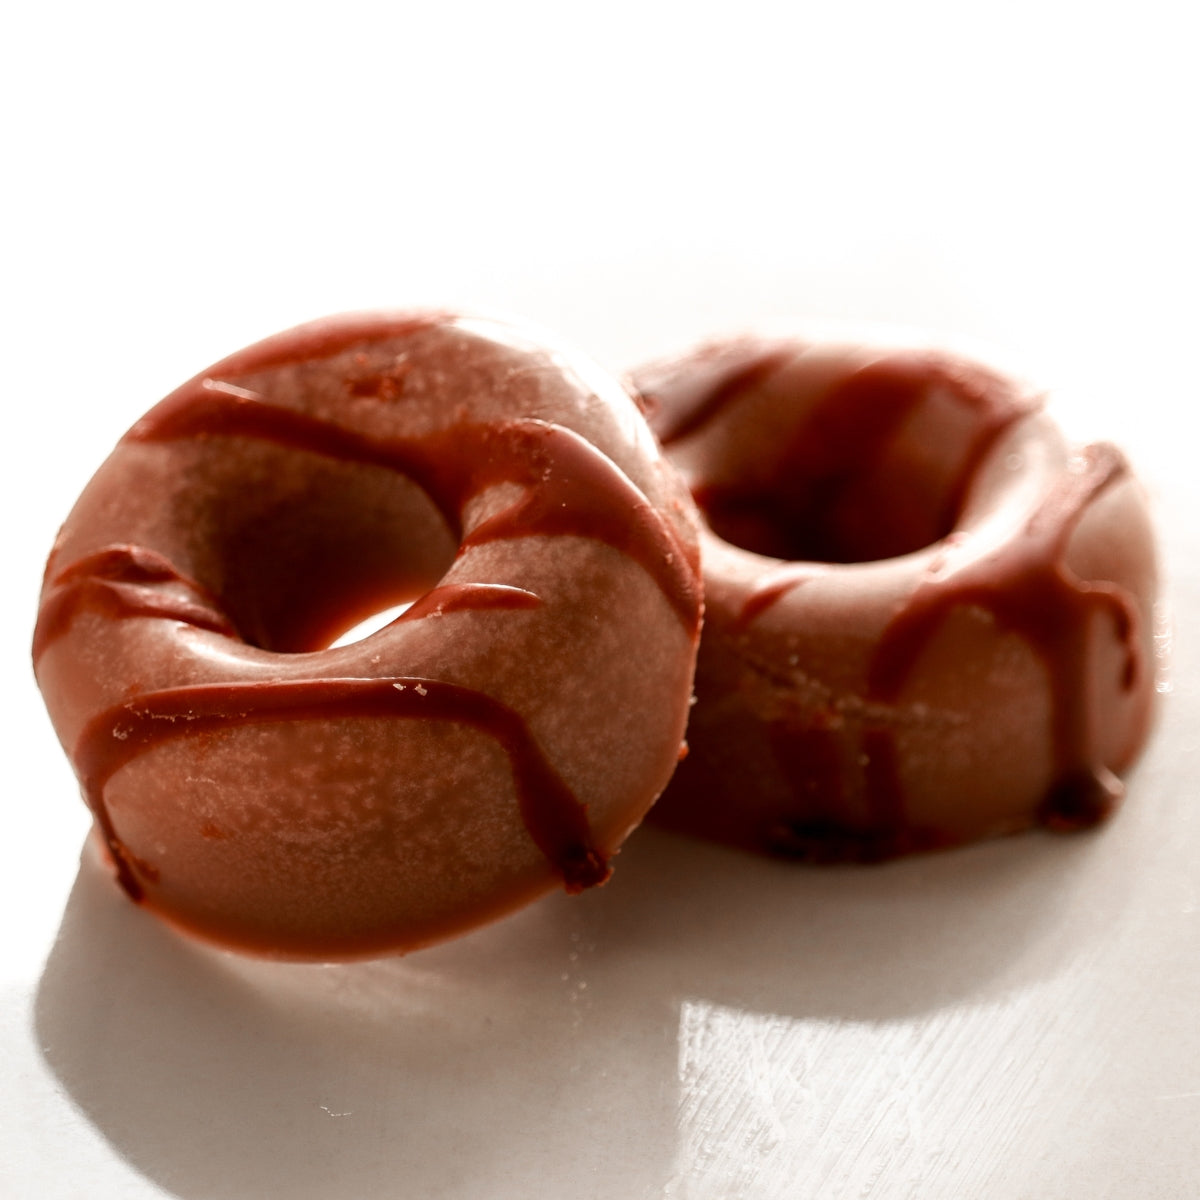 Cozybox Donuts Wax Melts Cinnamon Roll από Κερί Eλαιοκράμβης